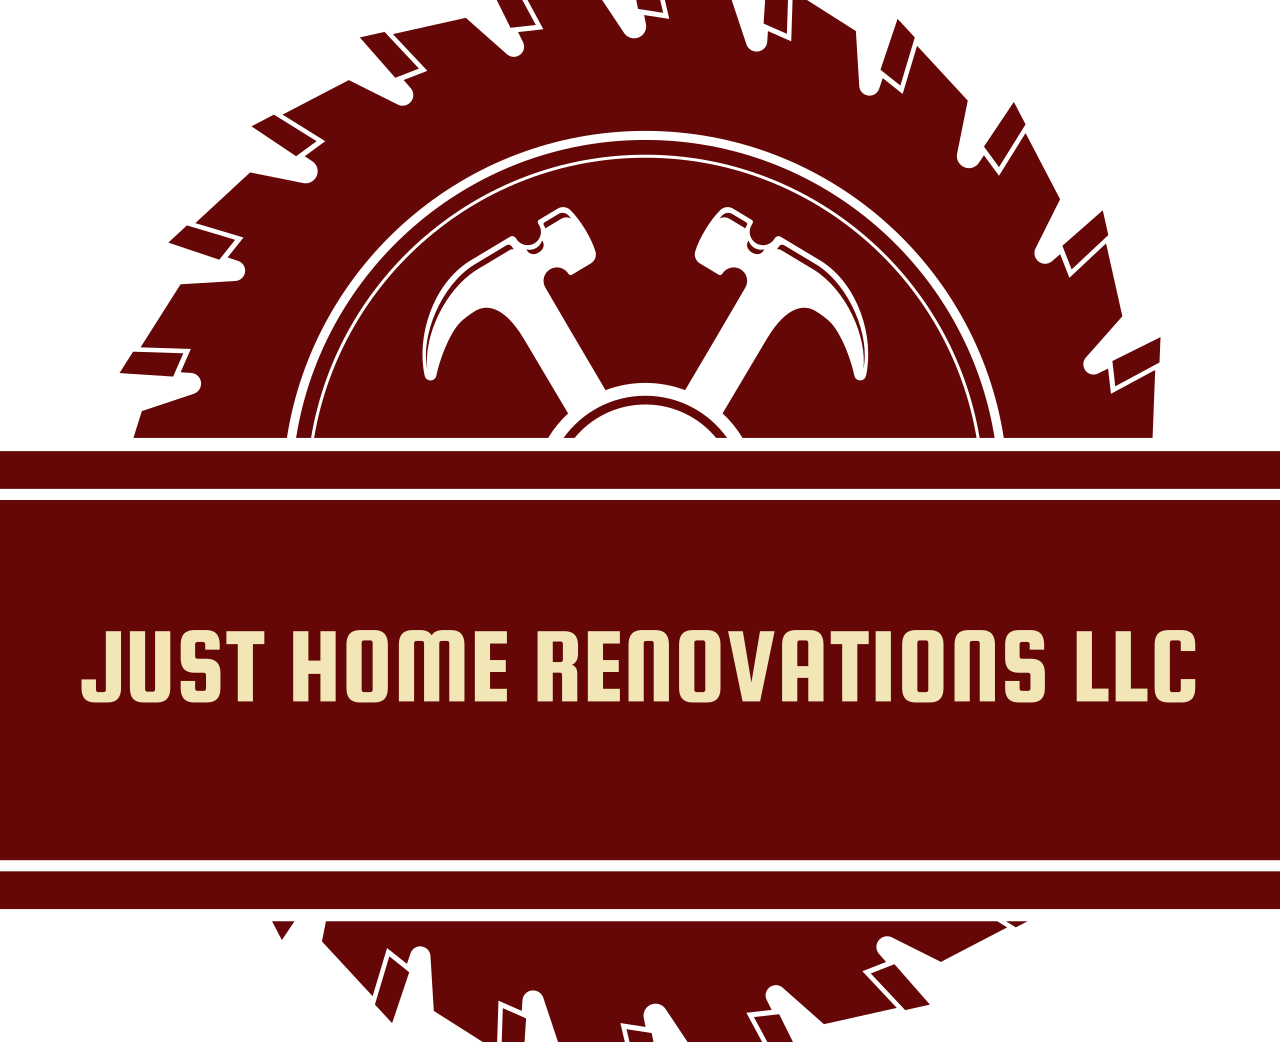 Just Home Renovations LLC's logo